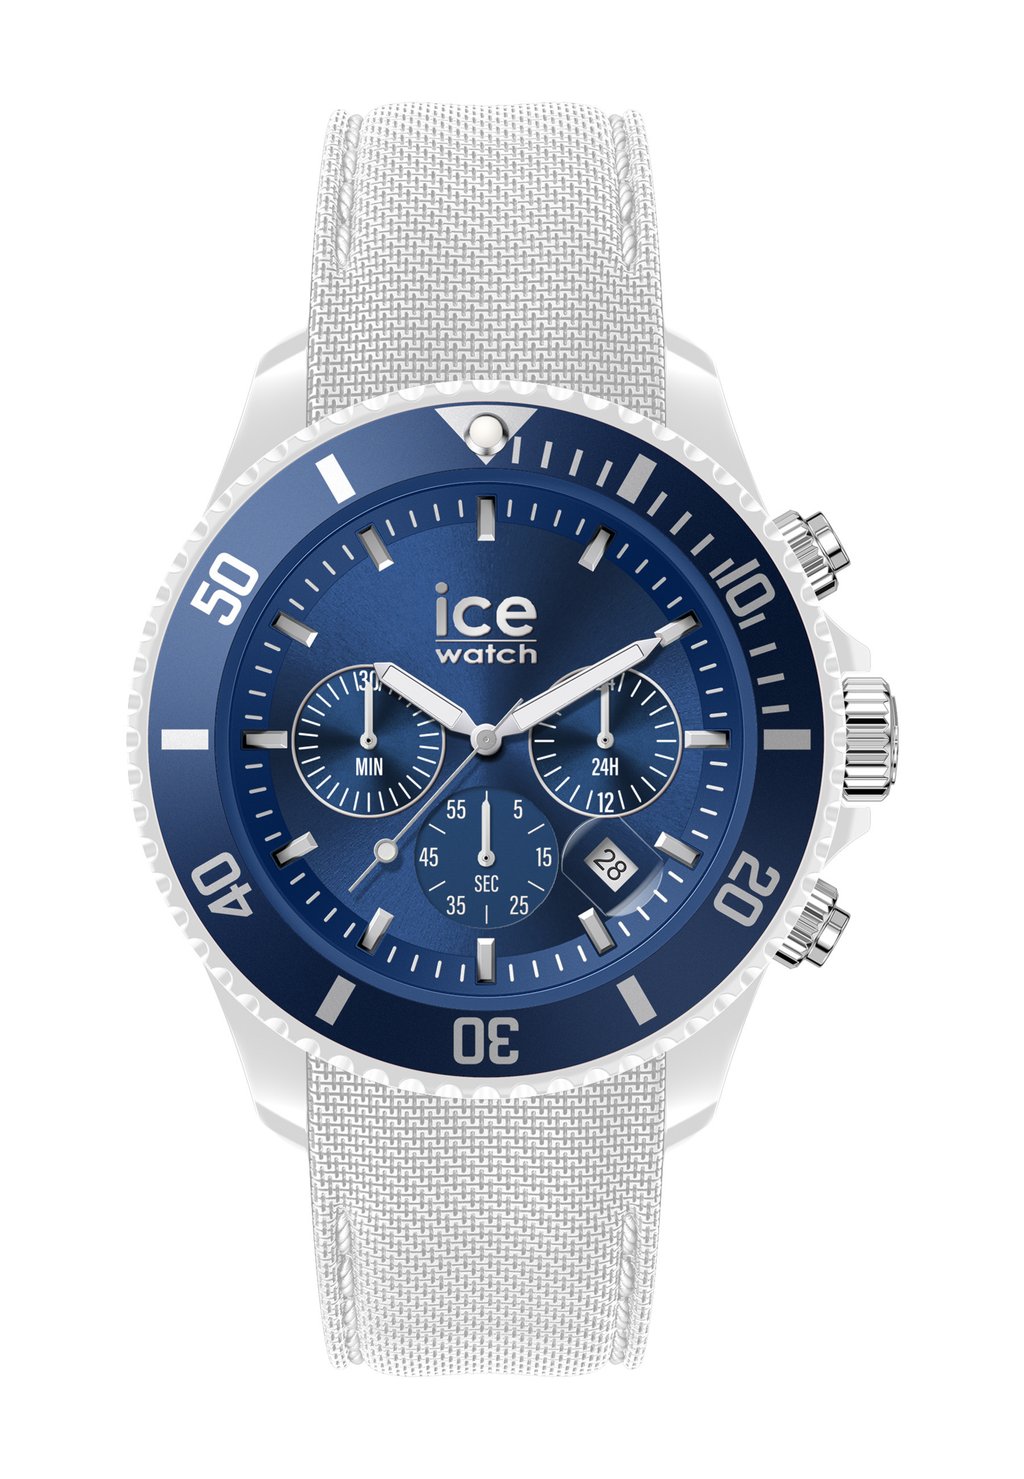 Хронограф Ice-Watch, цвет white blue l hamilton l dead ice